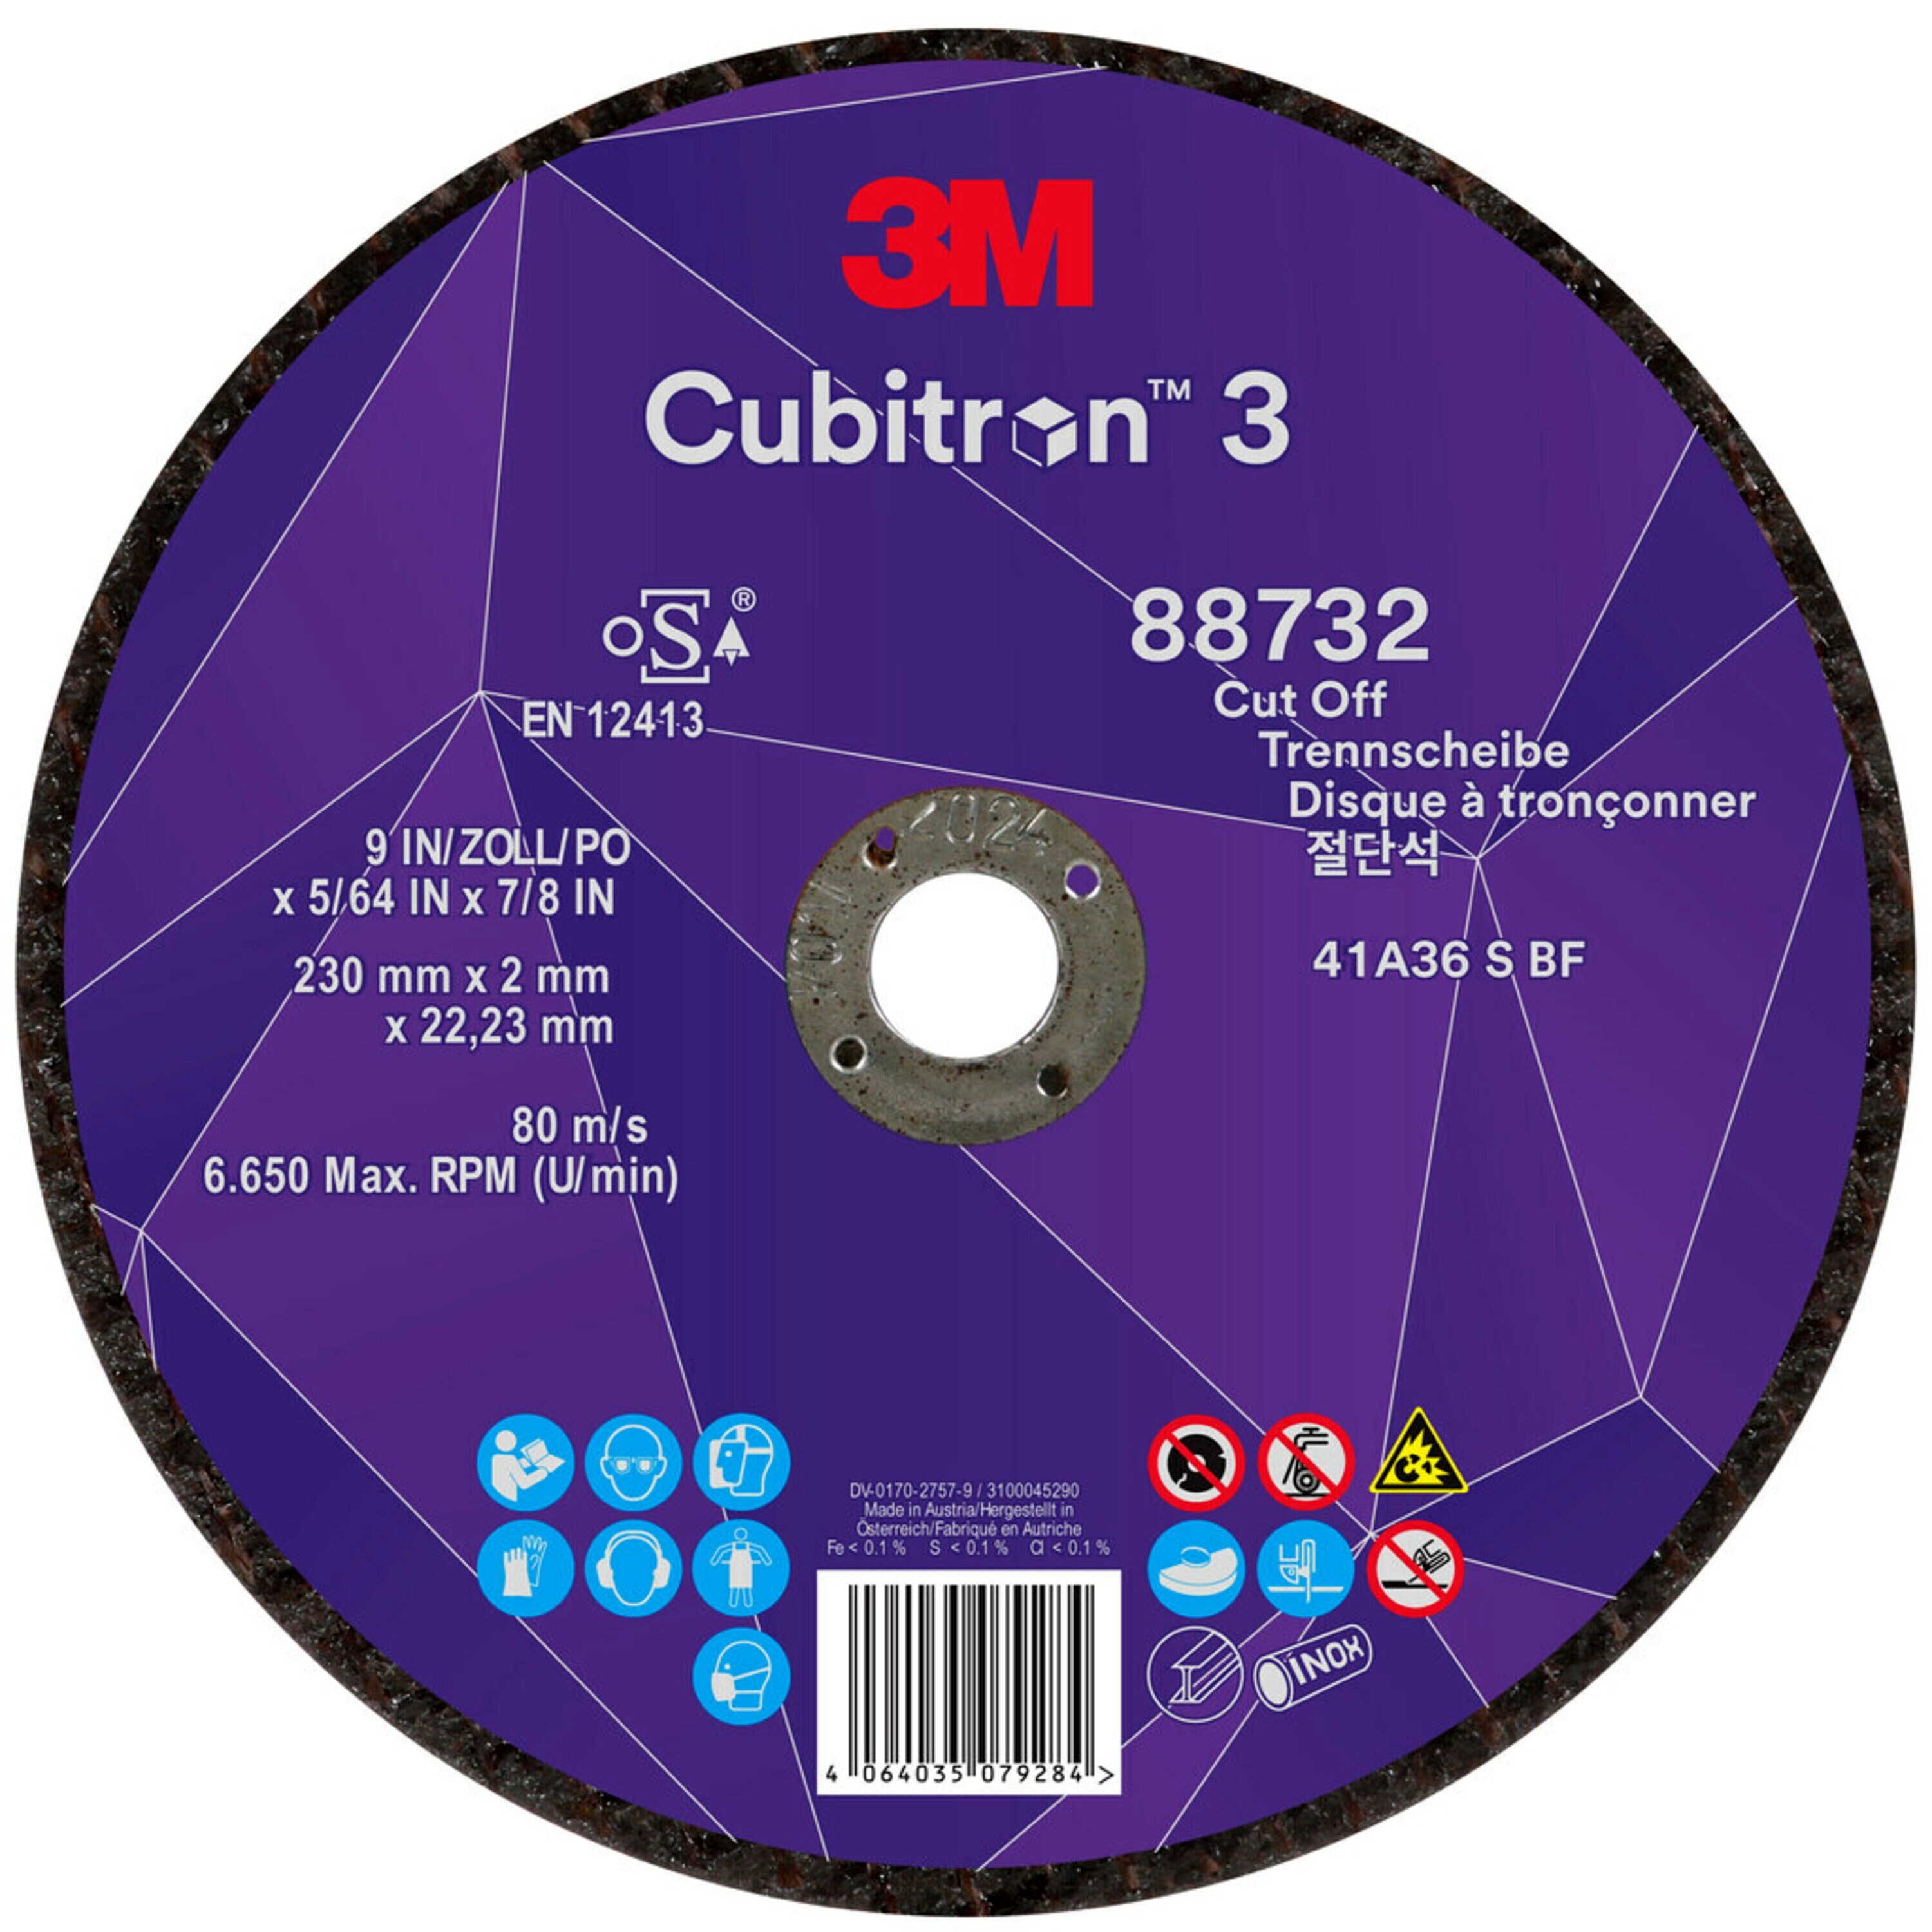 3M Cubitron 3 cut-off wheel, 230 mm, 2 mm, 22.23 mm, 36 , type 41 #88732